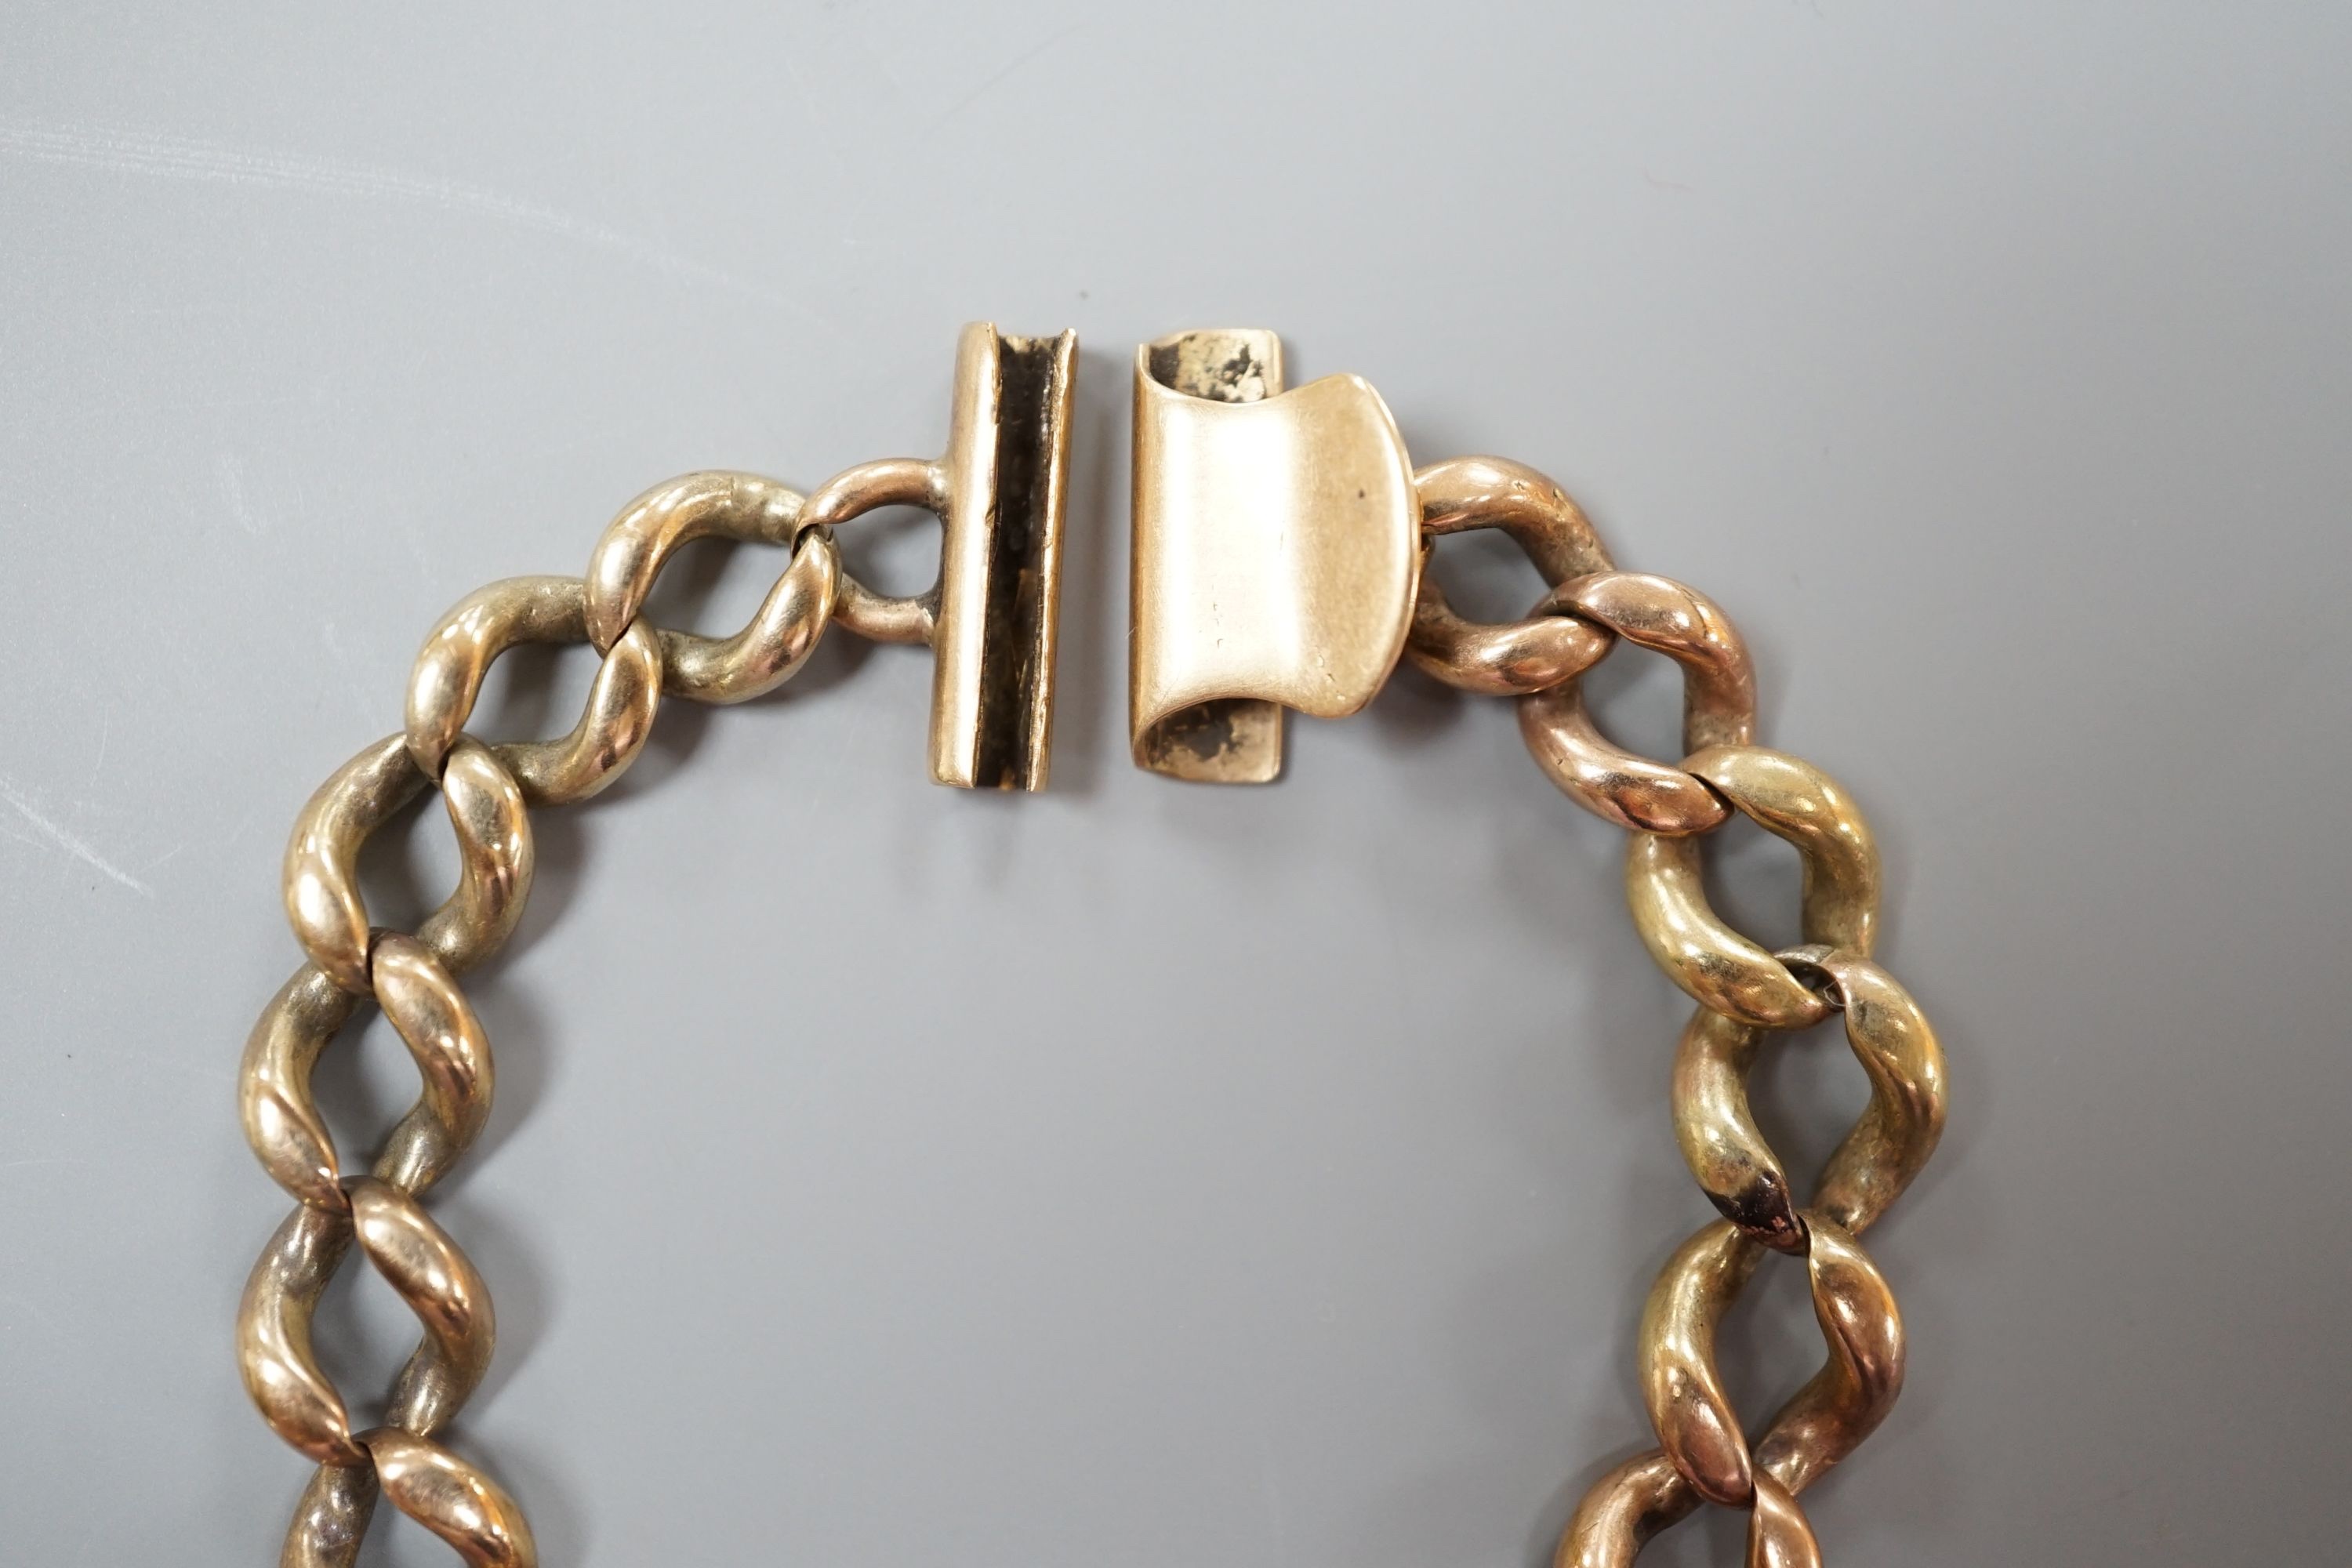 A yellow metal curb link bracelet, 14cm